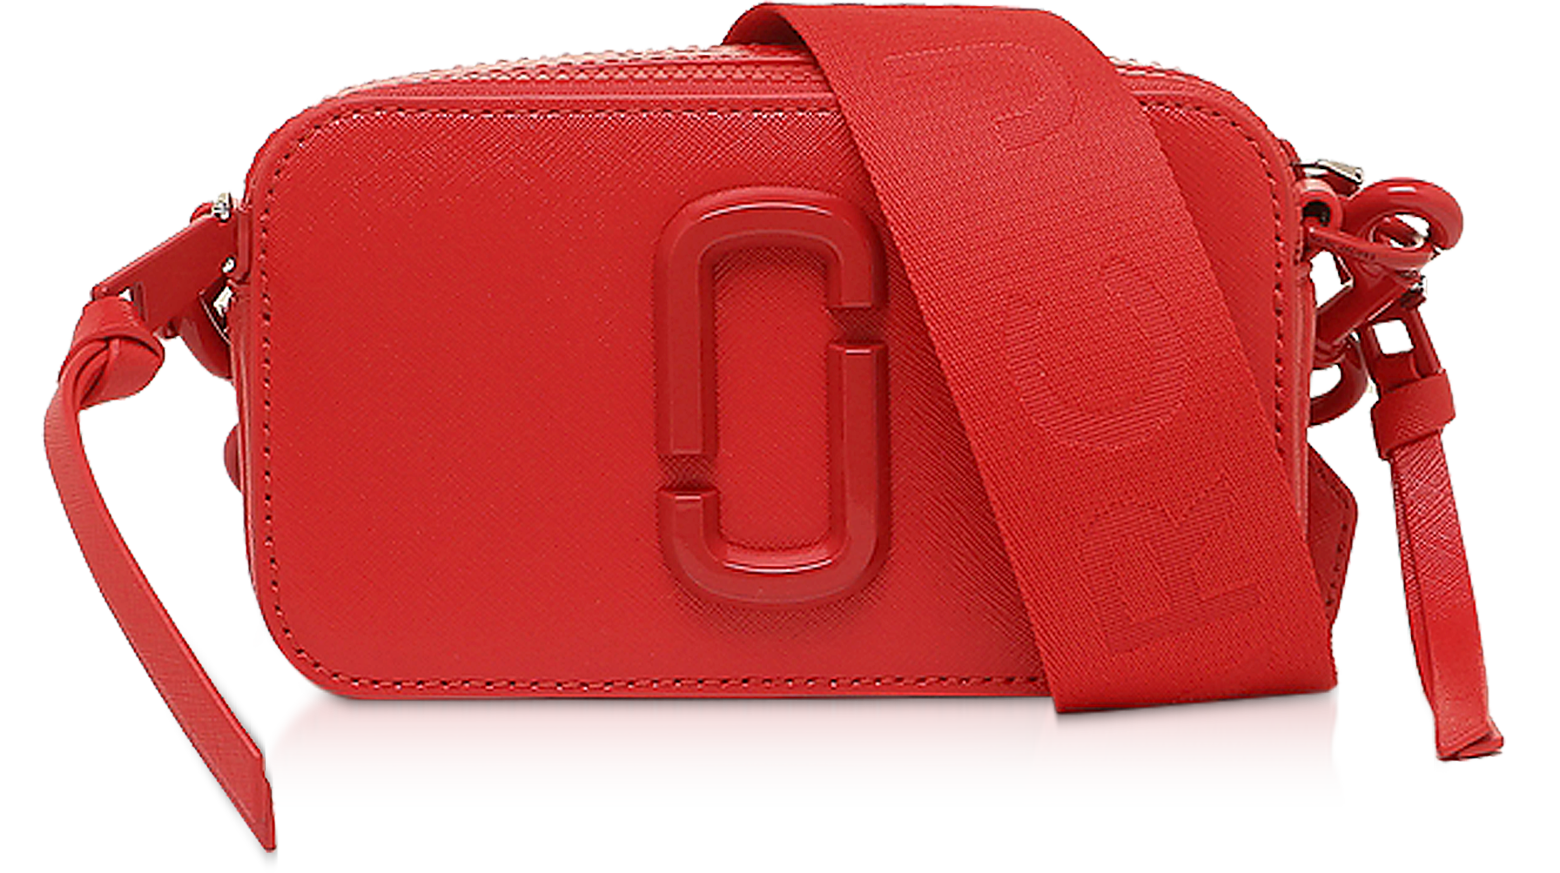 Marc Jacobs The Snapshot Dtm Pink Card Holder - Ferraris Boutique